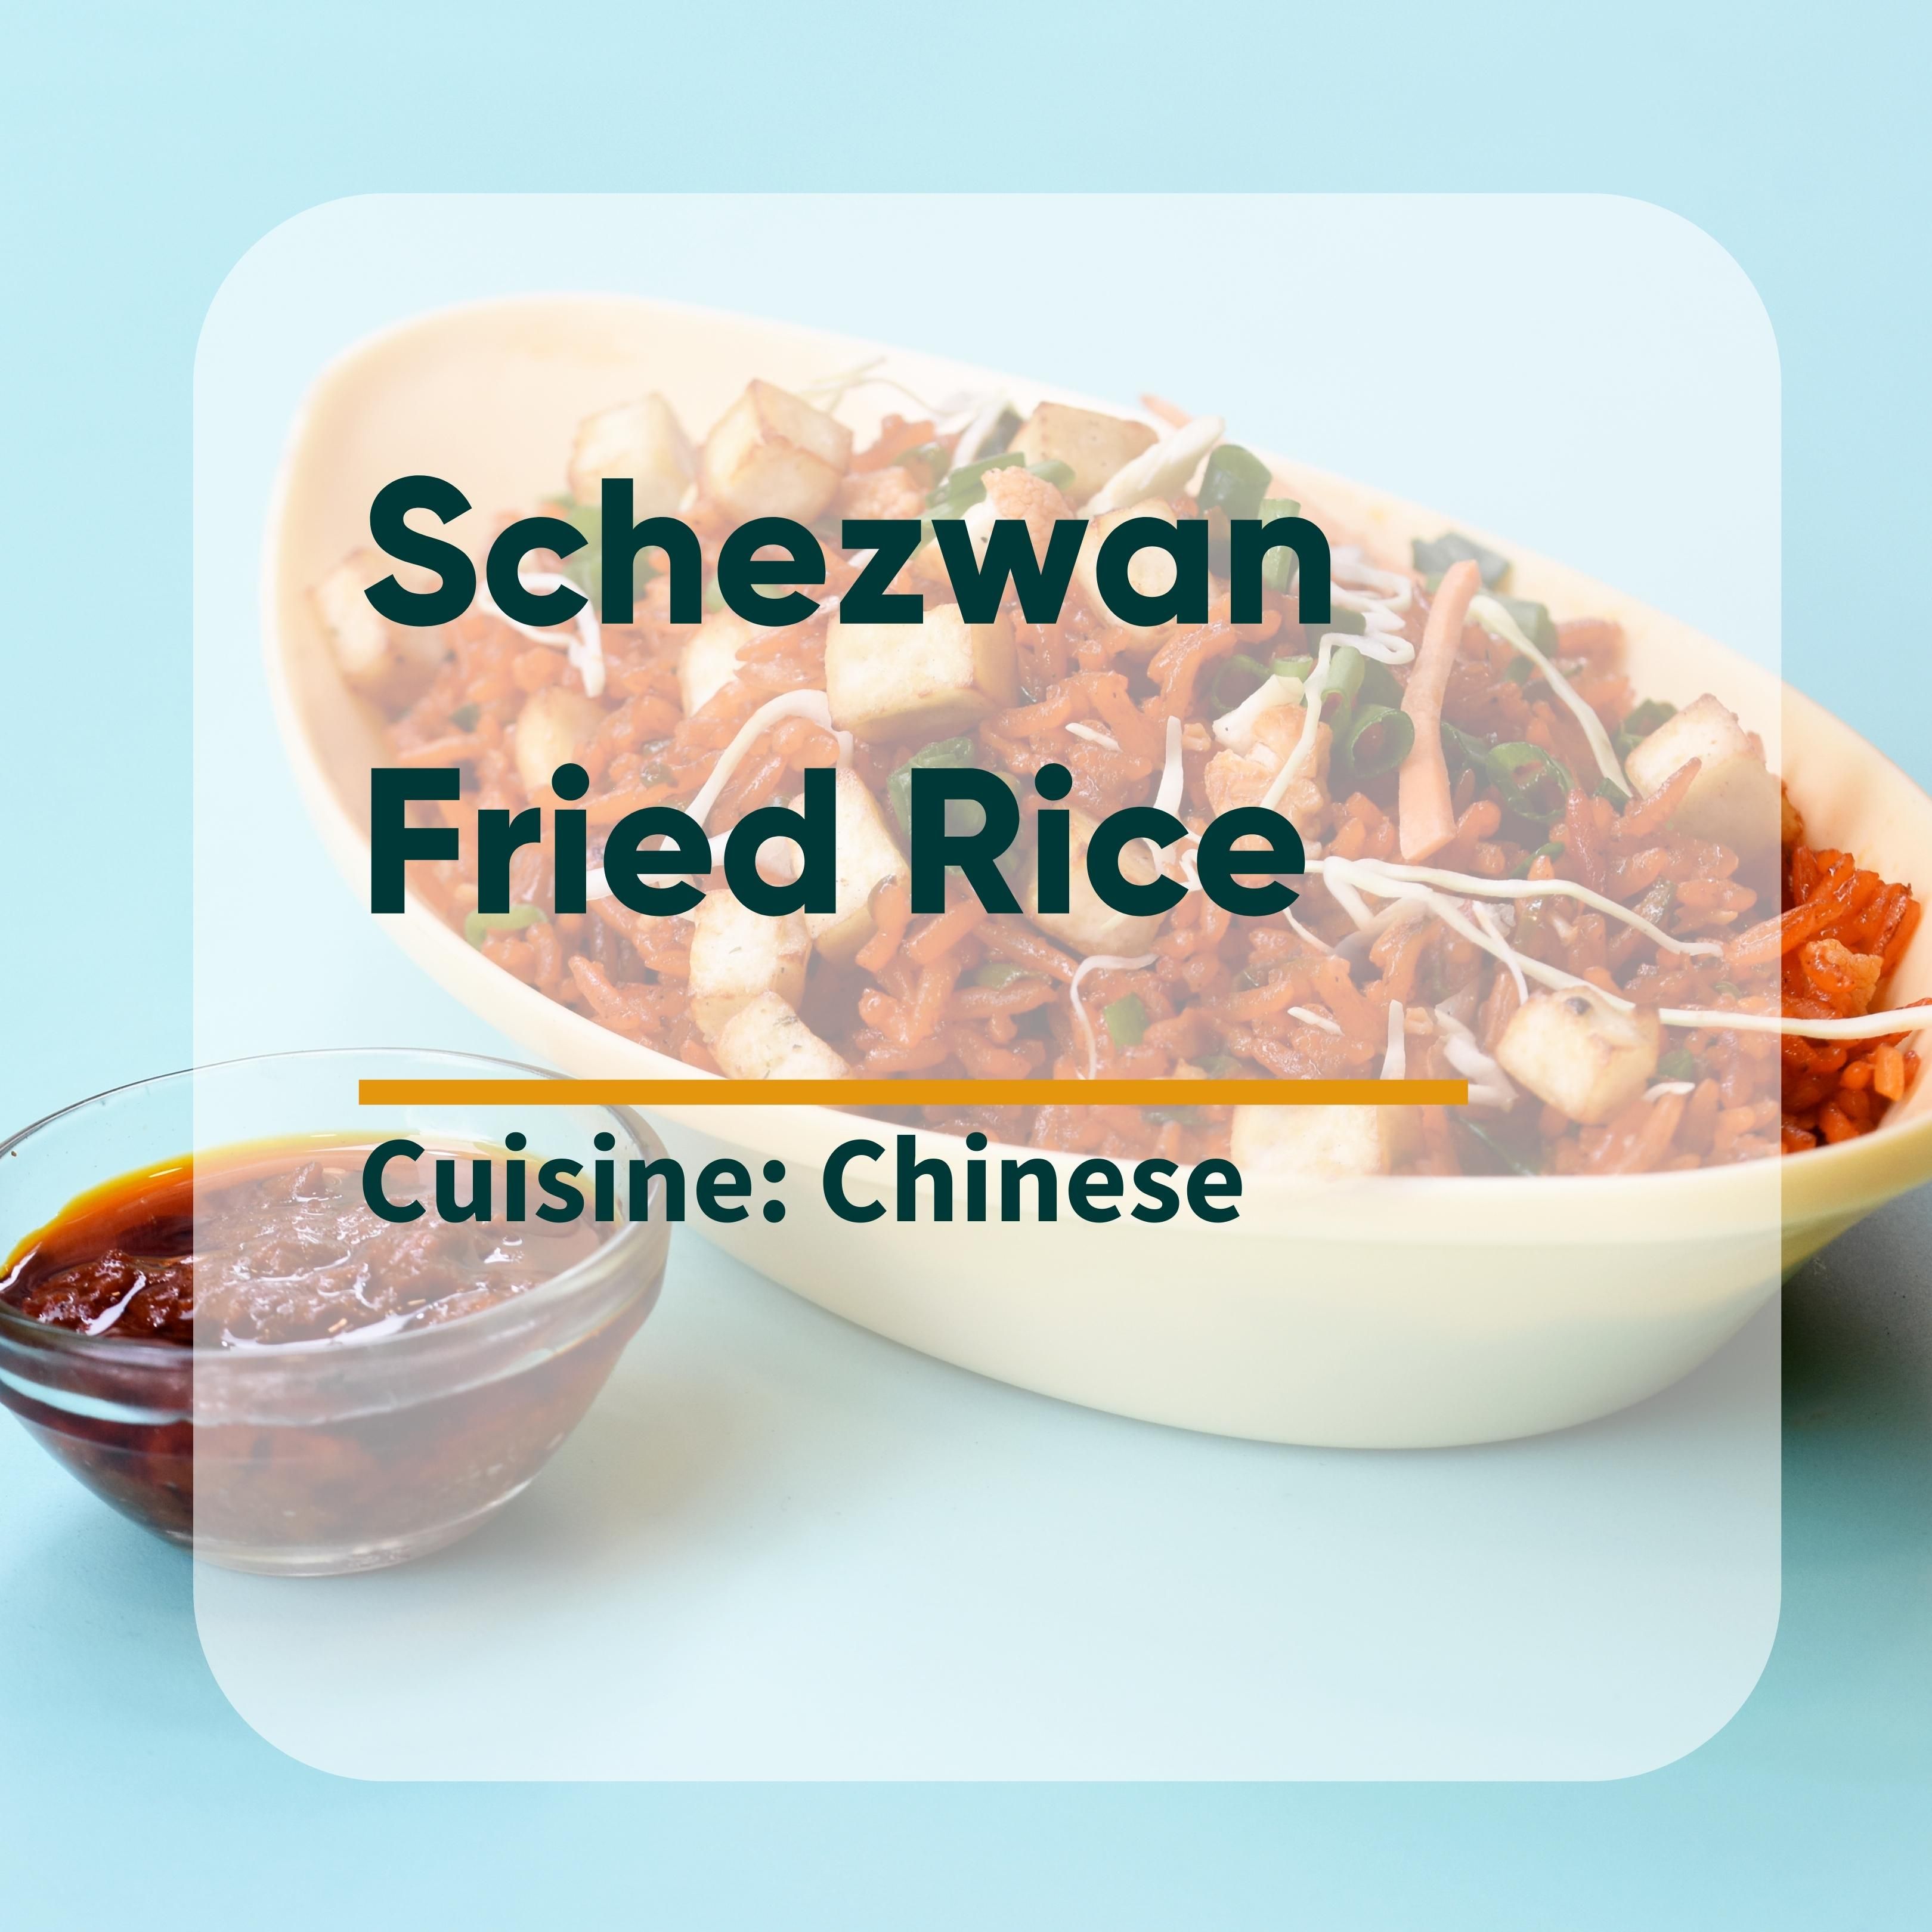 Schezwan Fried Rice Image